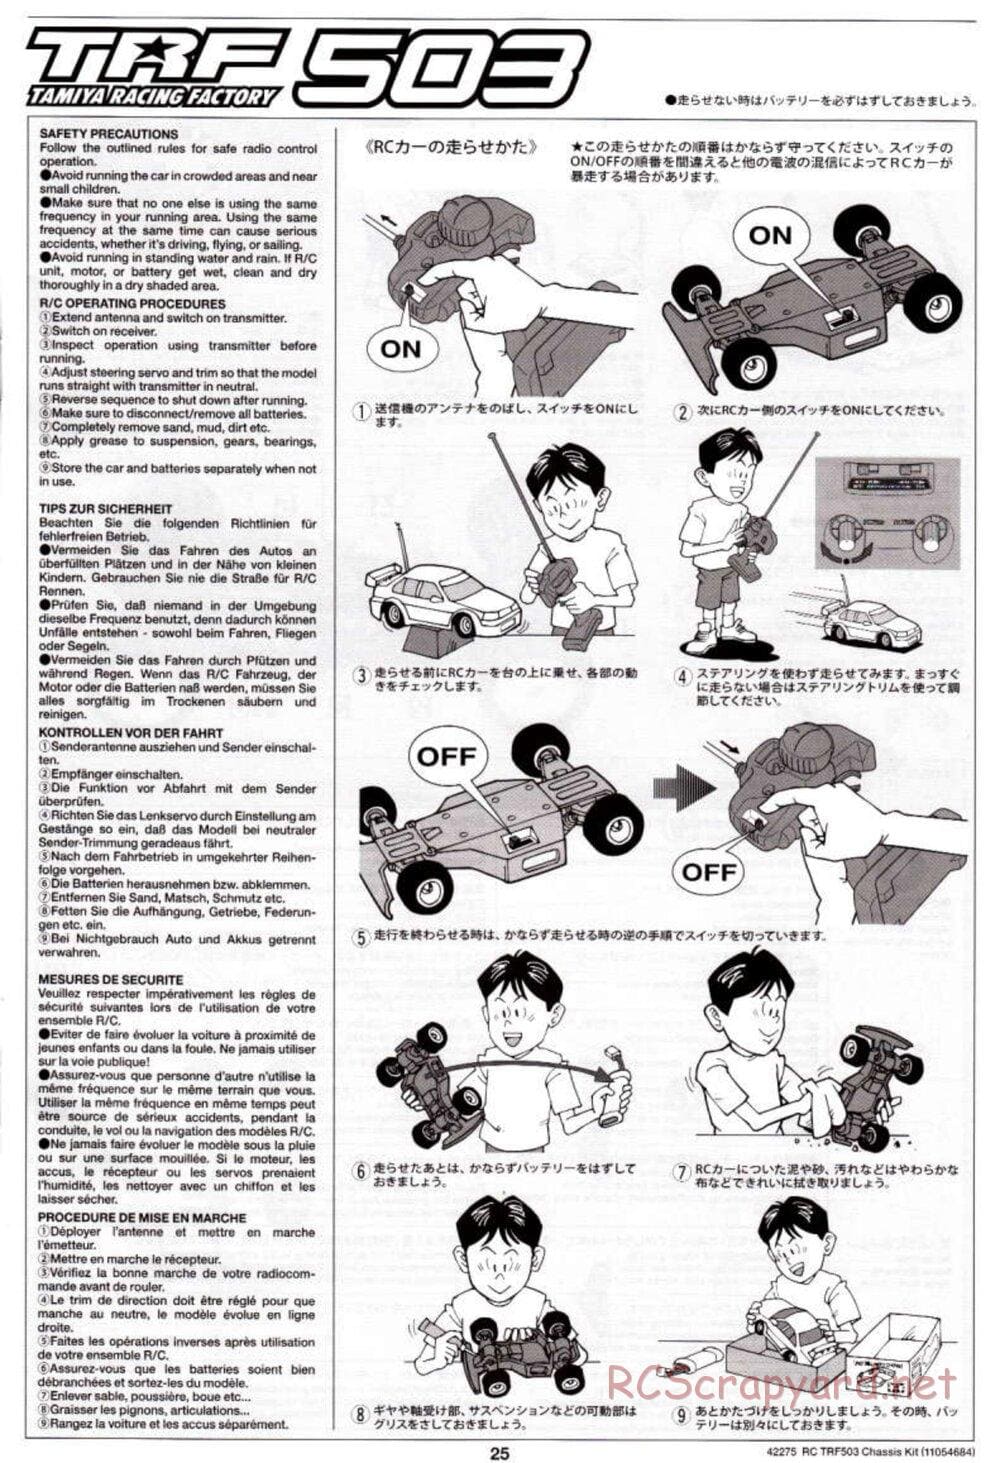 Tamiya - TRF503 Chassis - Manual - Page 25